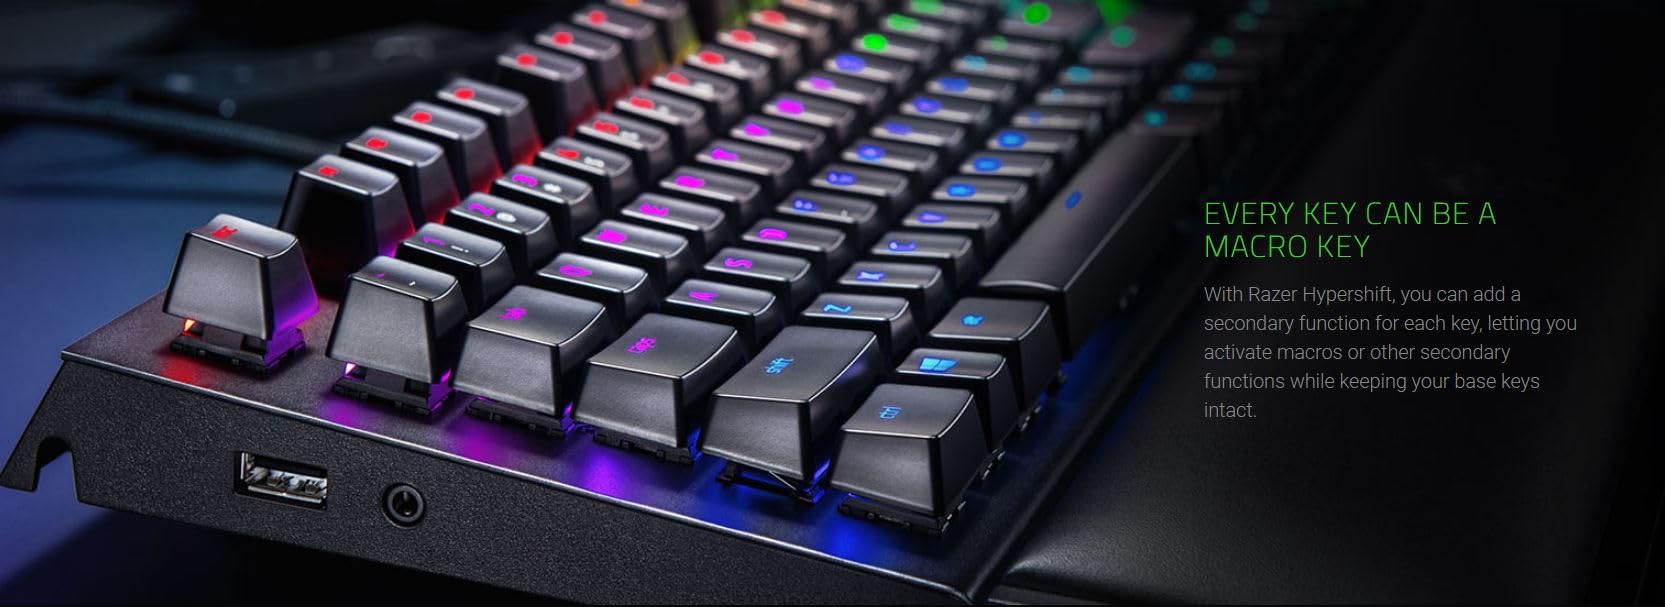 Razer BlackWidow Elite Mechanical Gaming Keyboard w/ Dedicated Media Keys & Dial (Excellent - Refurbished, Black)